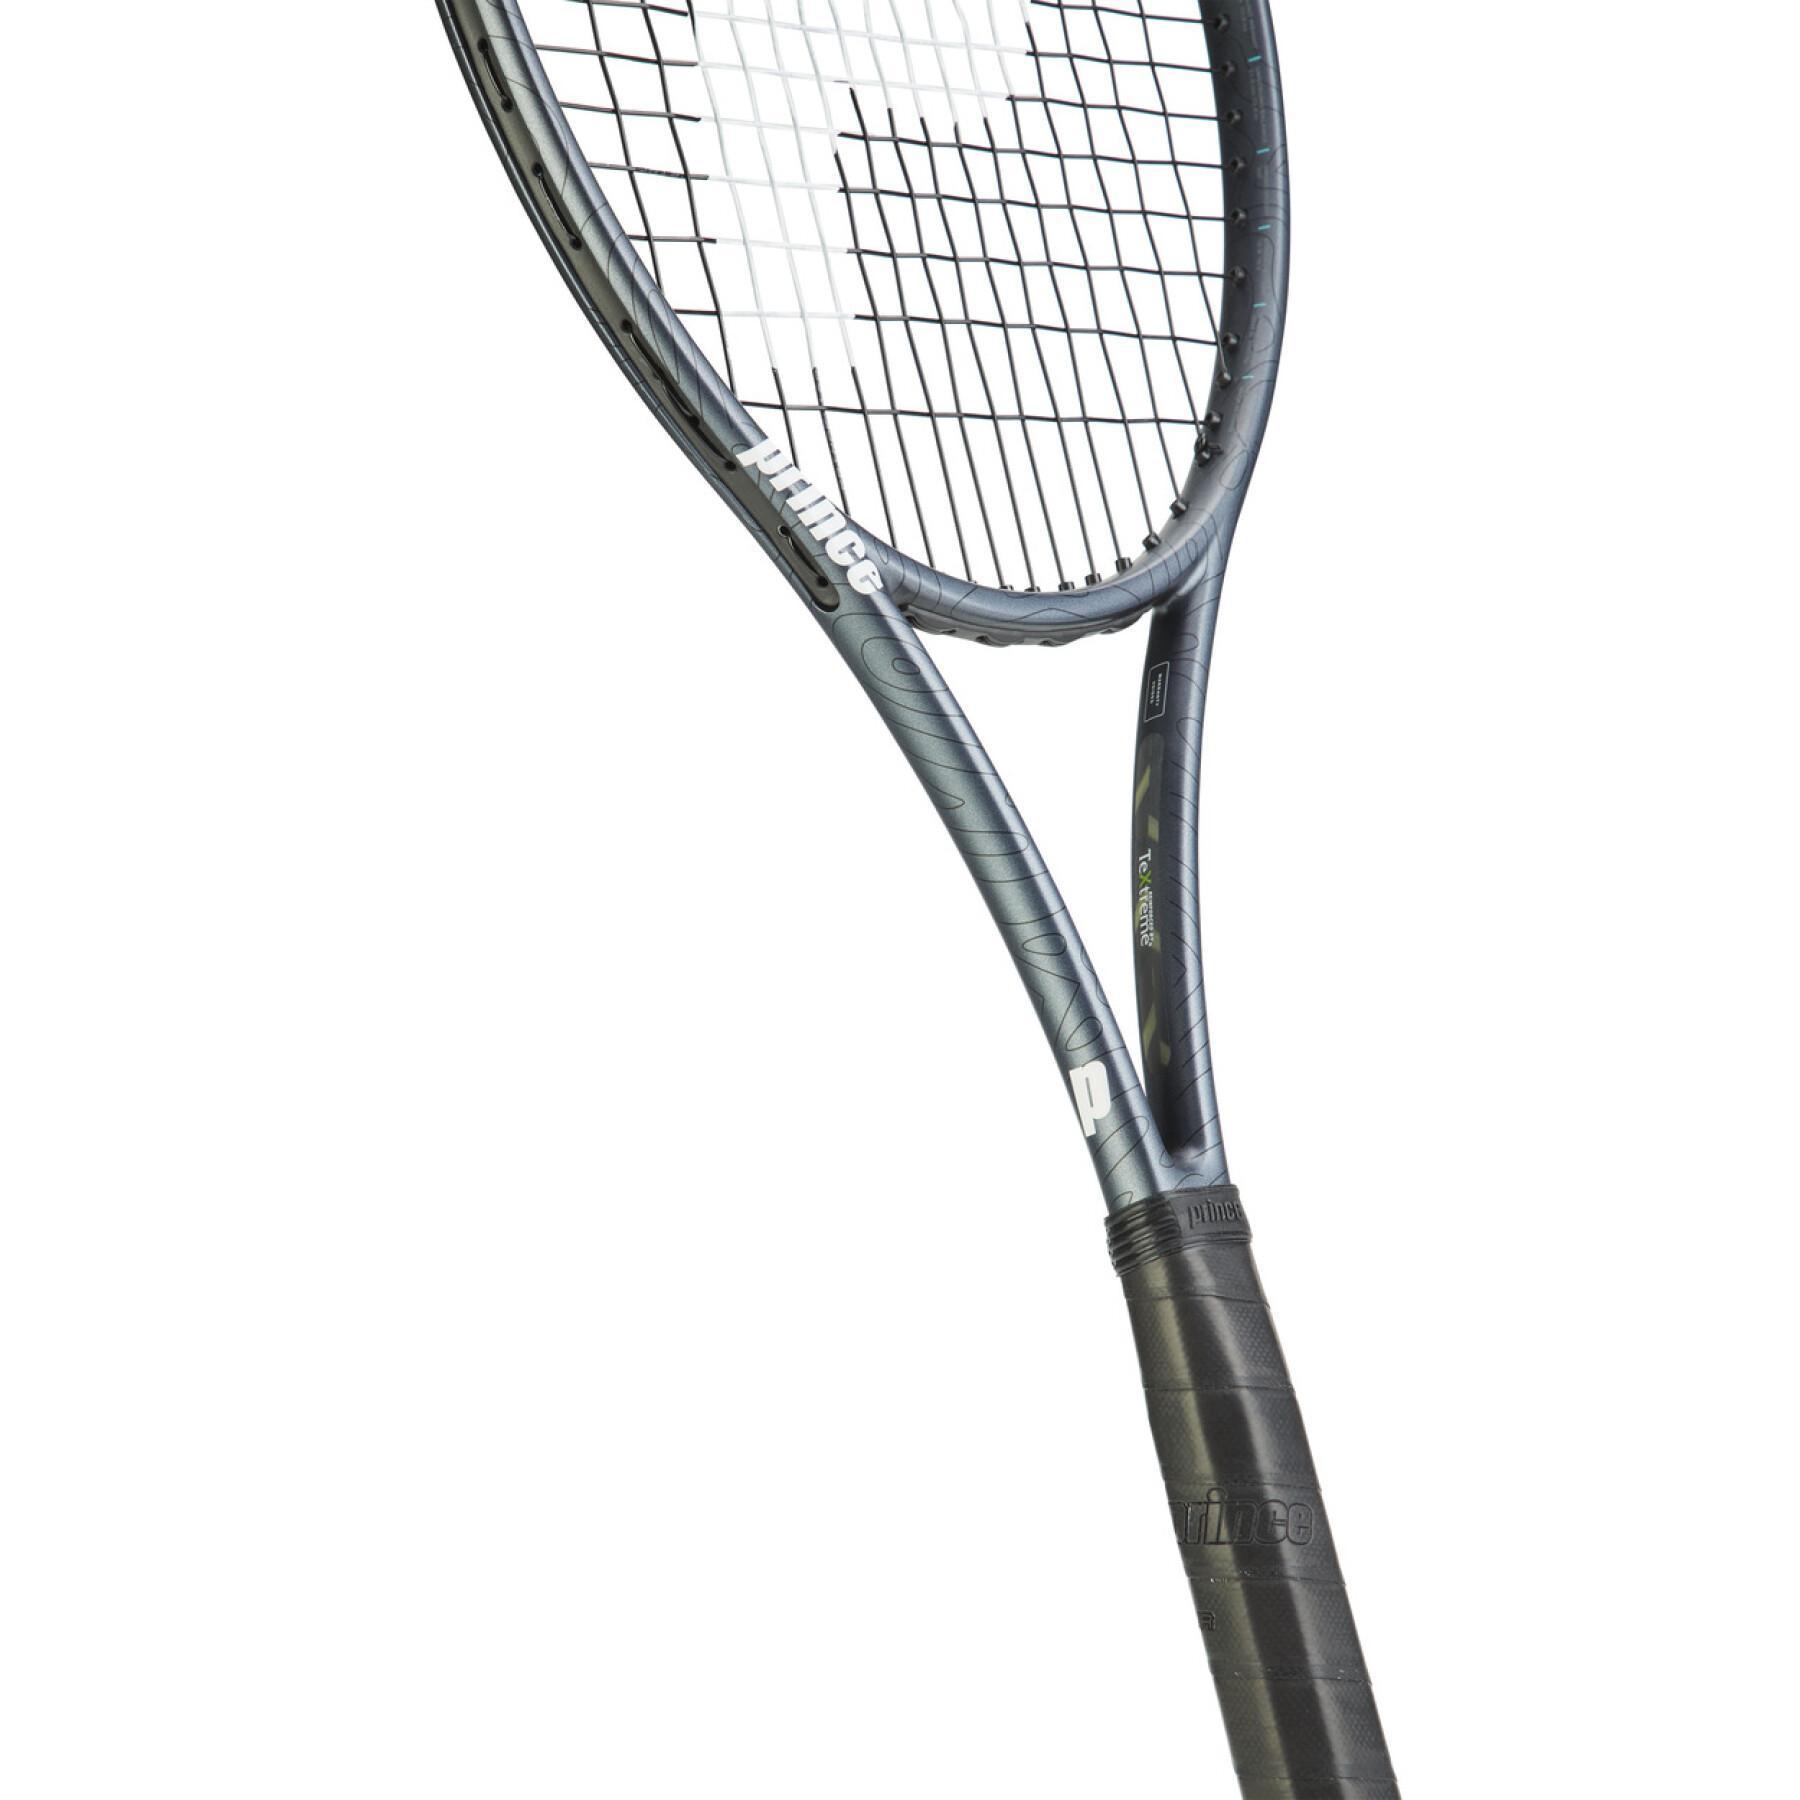 Racchetta da tennis Prince phantom 100x (305gr)